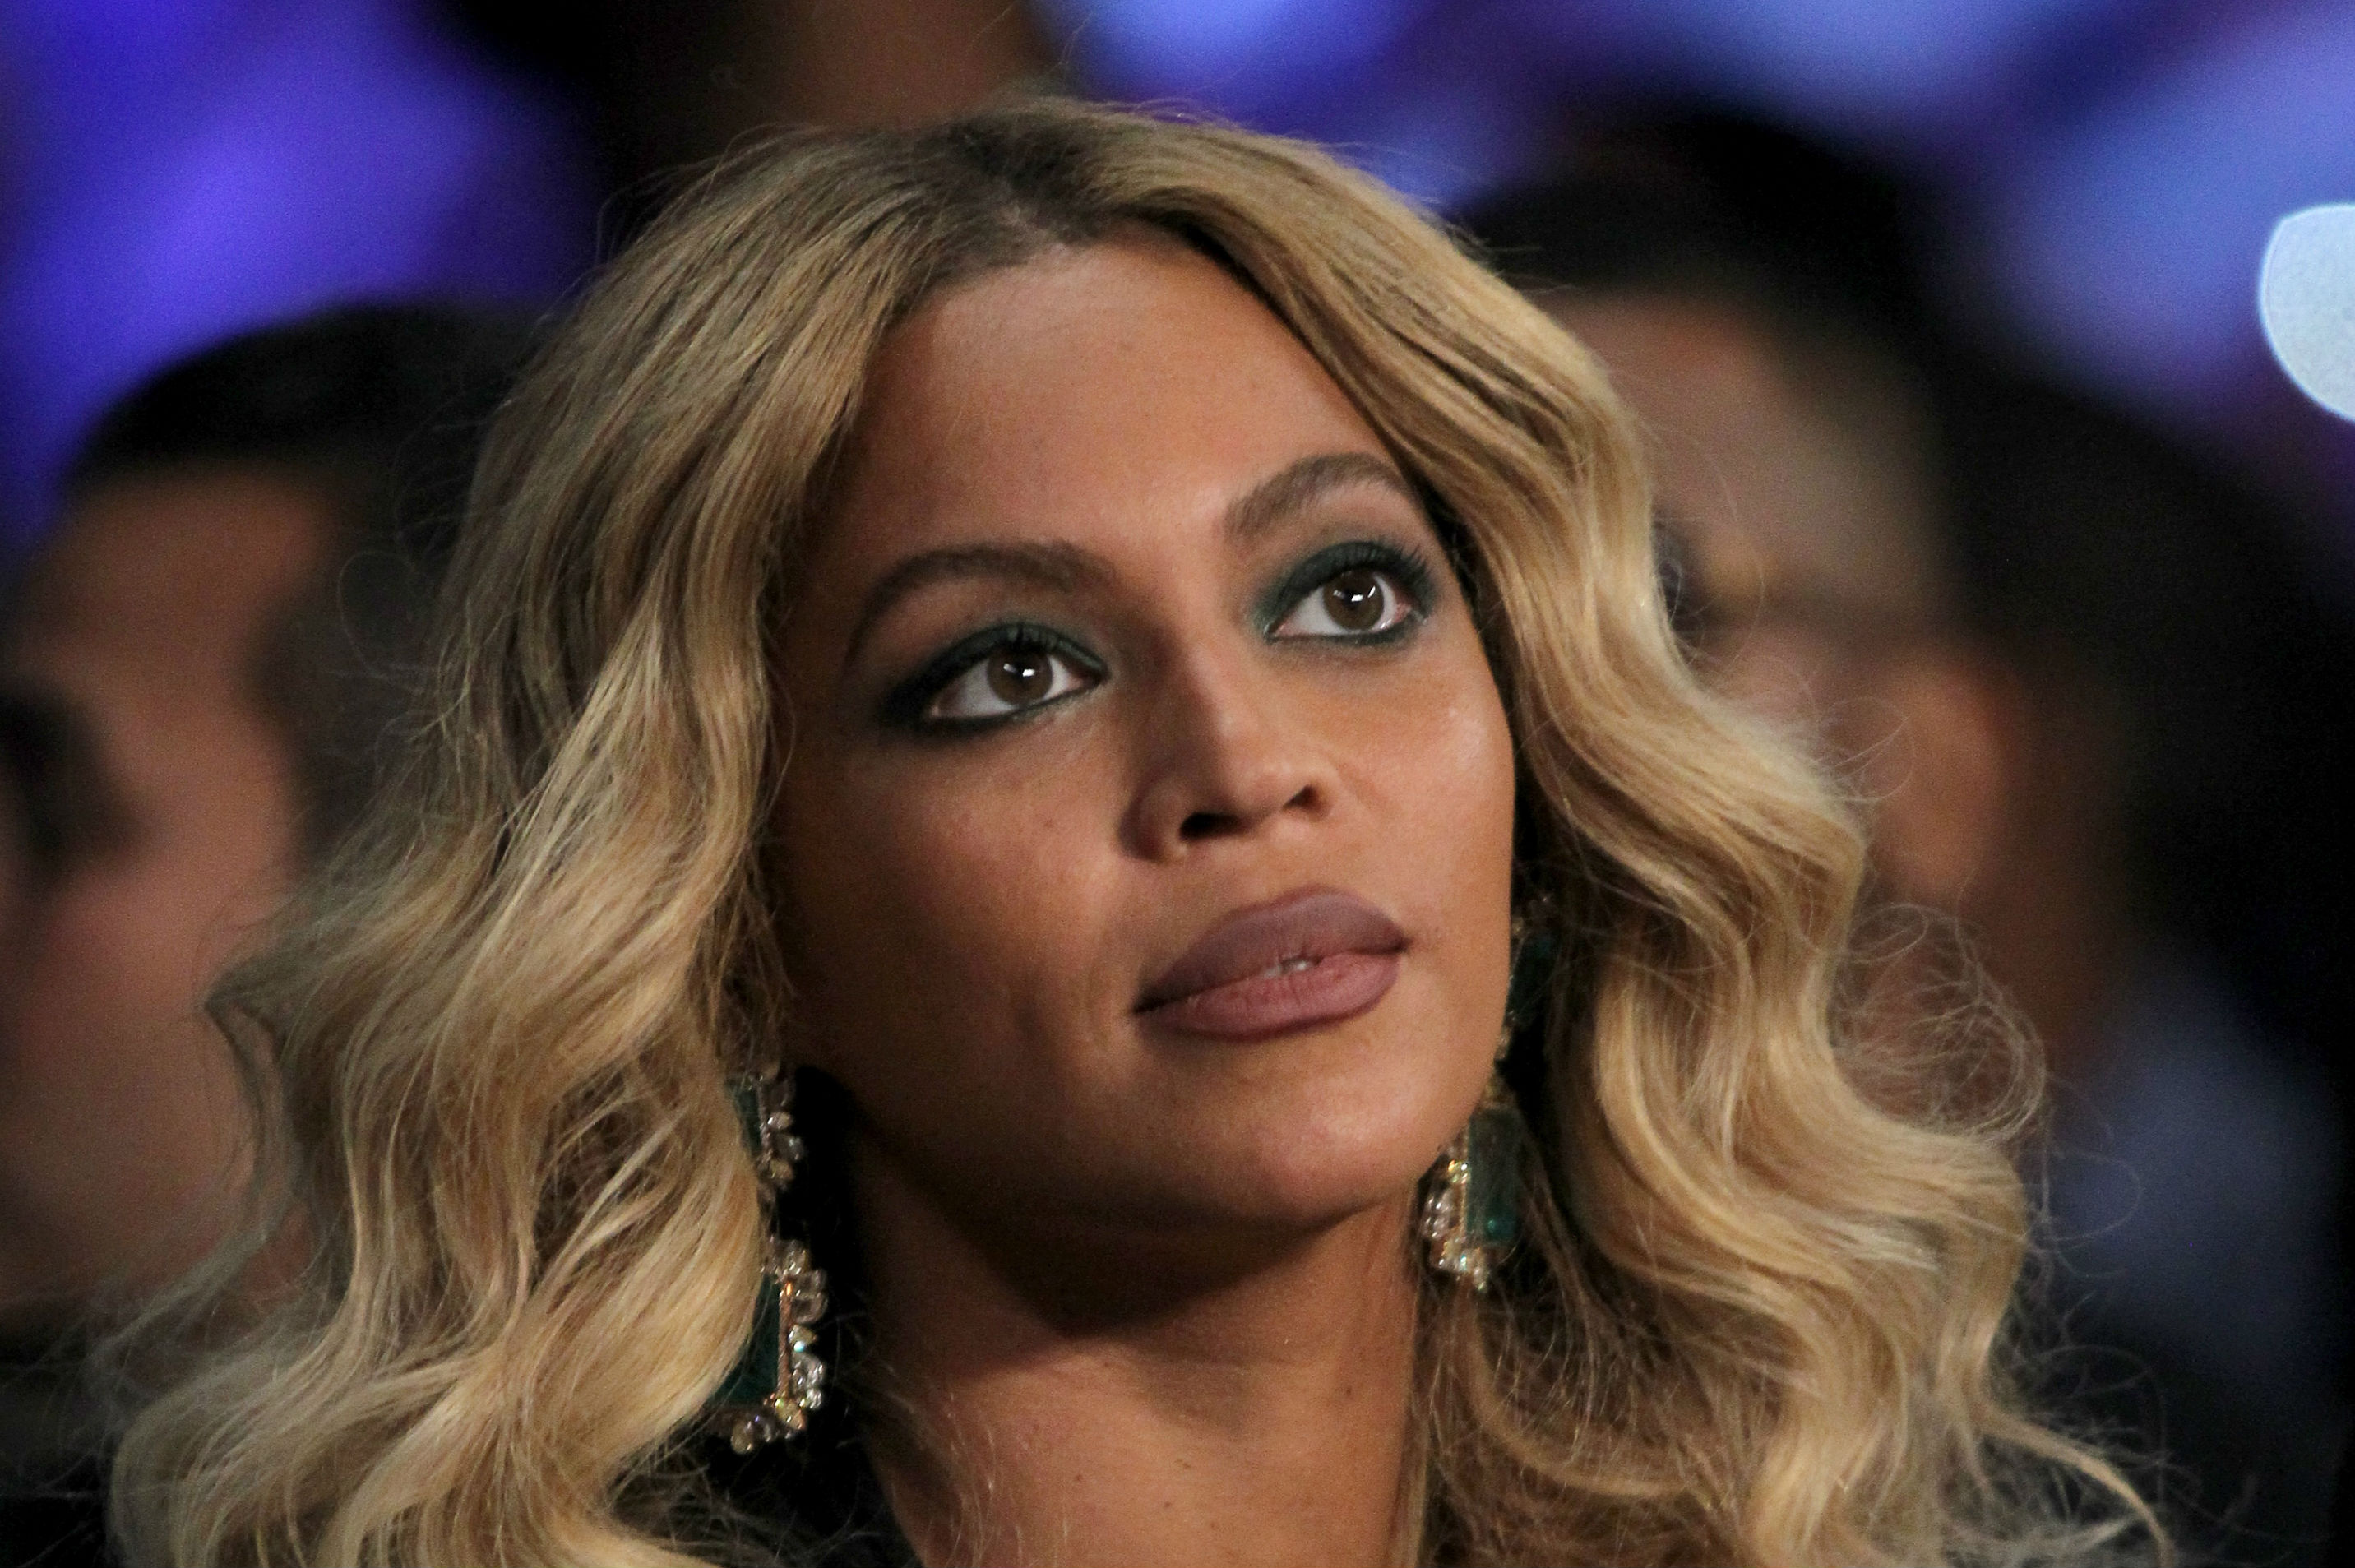 Beyoncé Welcomes Megan Thee Stallion For Hometown 'Savage' Debut